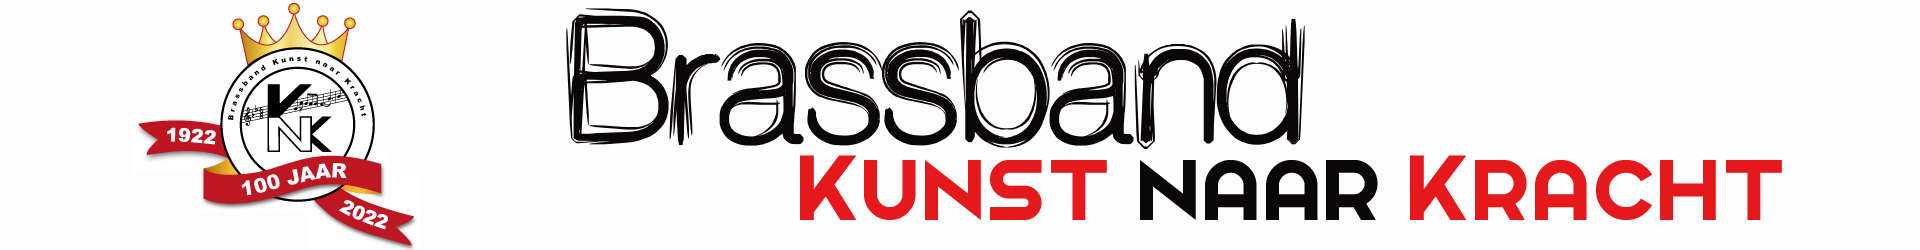 Brassband Kunst naar Kracht Logo